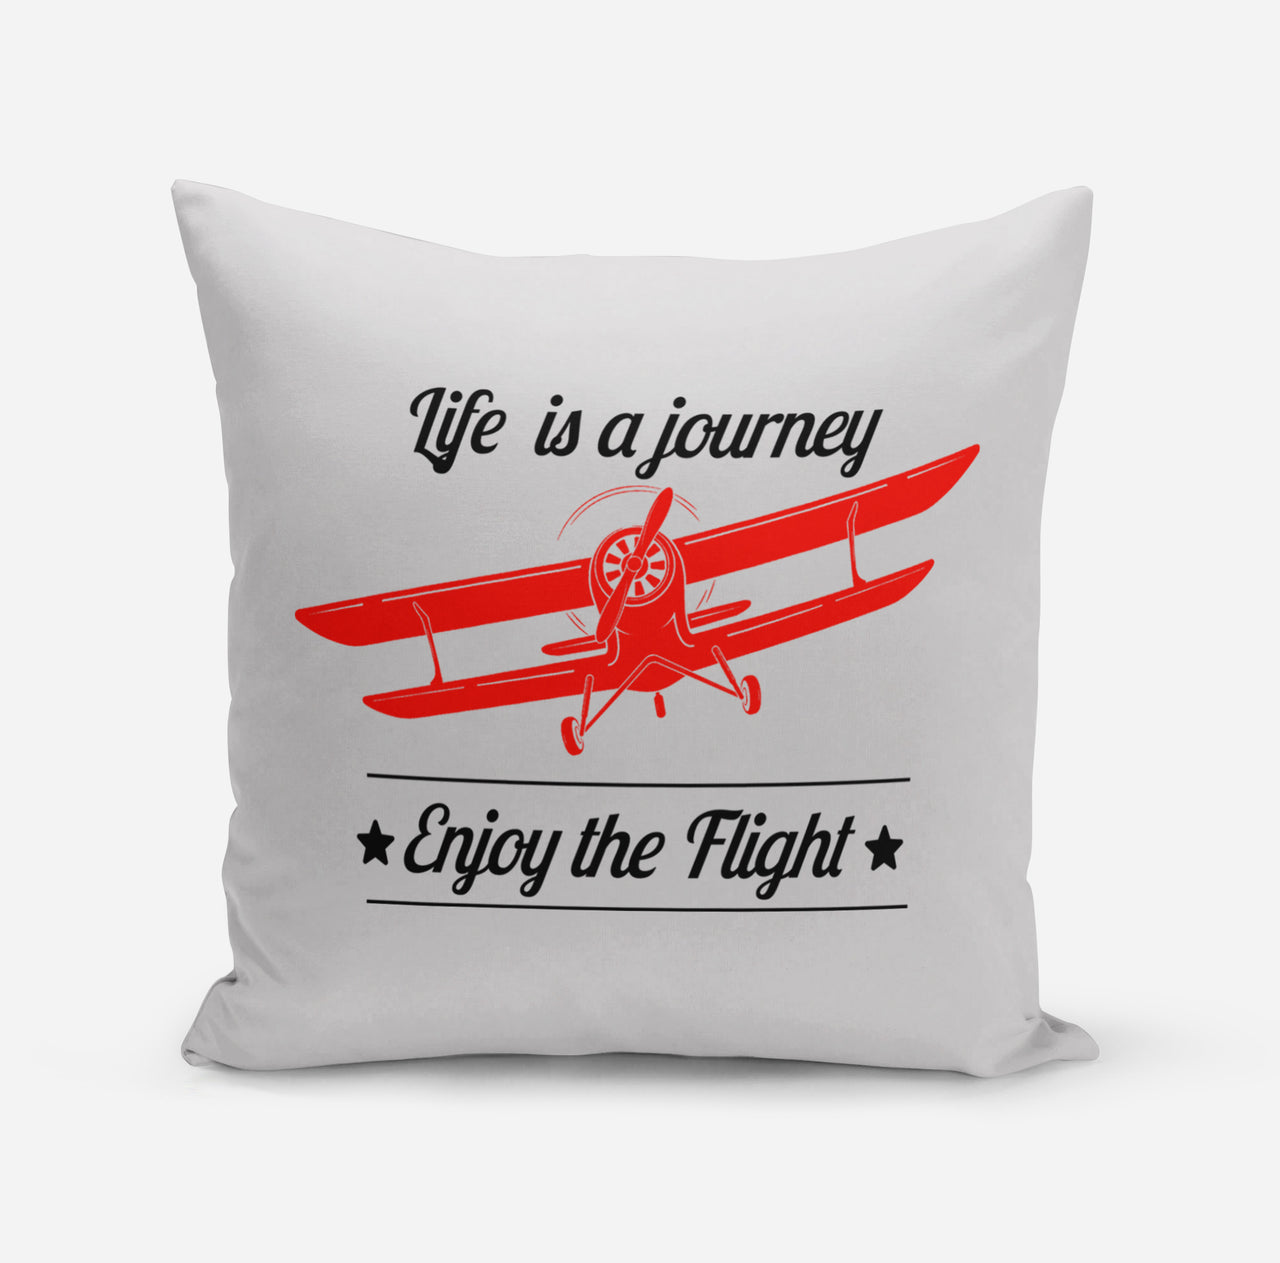 Life is a journey Enjoy the Flight Designed Pillows